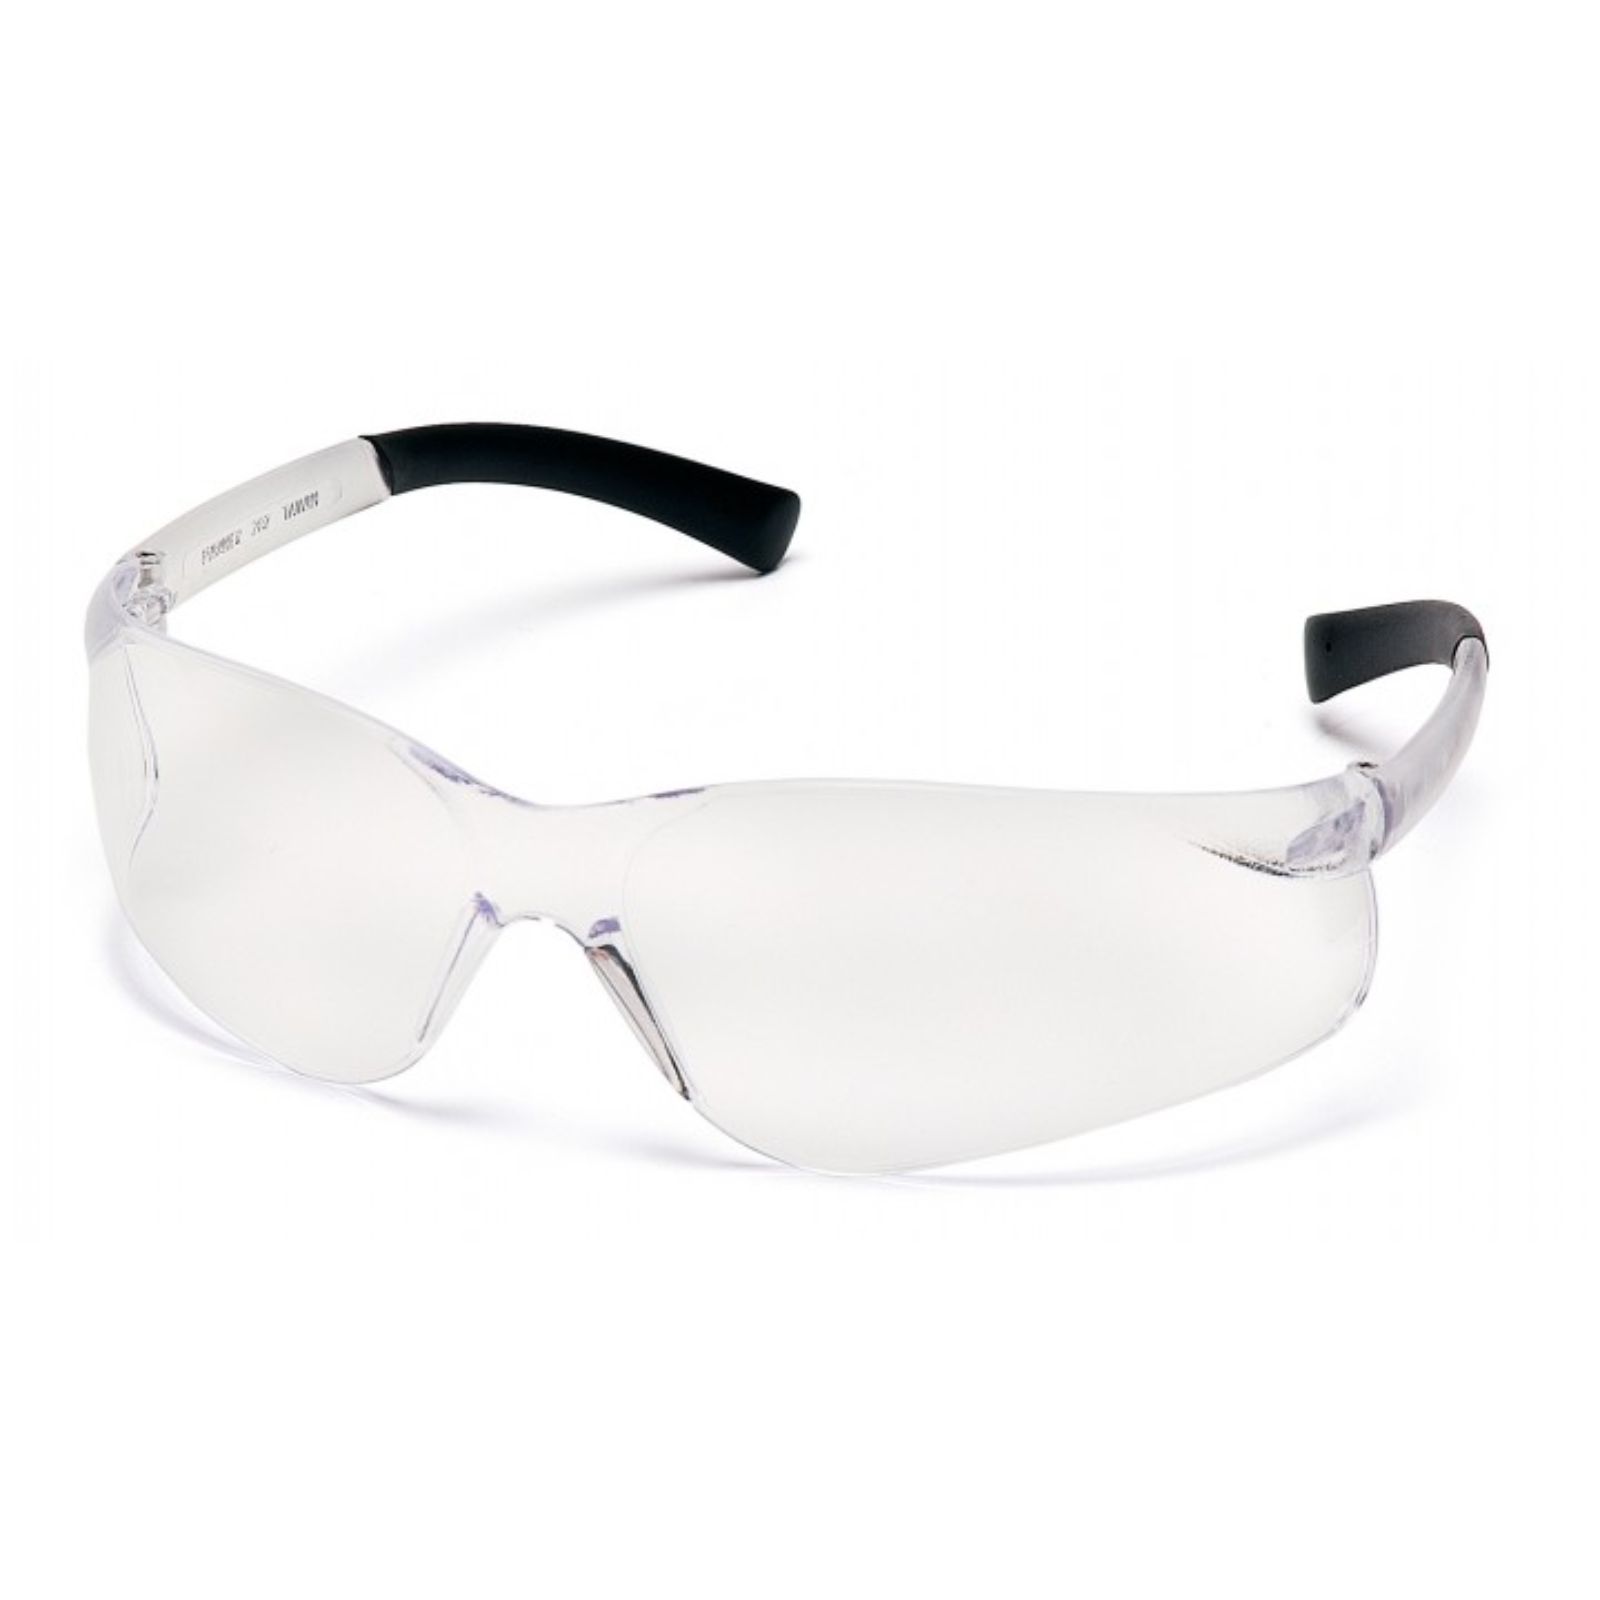 Pyramex Ztek Safety Glasses Clear Frame Clear AntiFog Lens